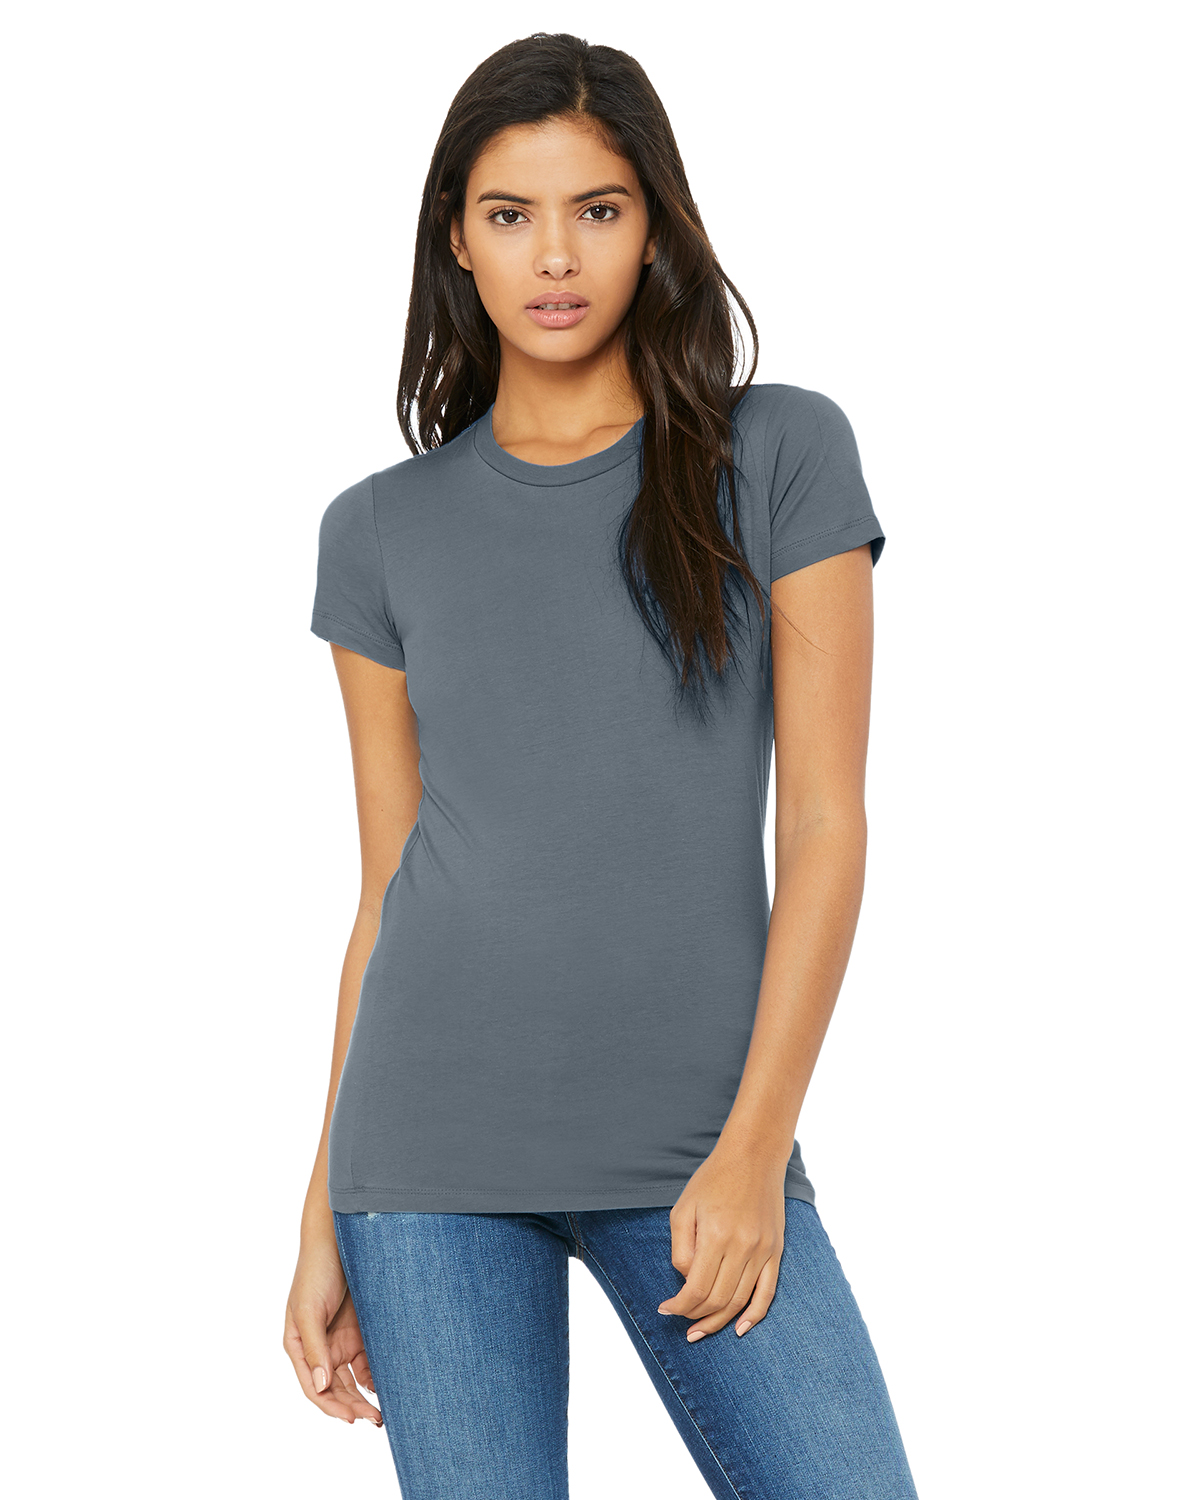 Bella + Canvas 6004 Ladies' The Favorite T-Shirt - JiffyShirts.com